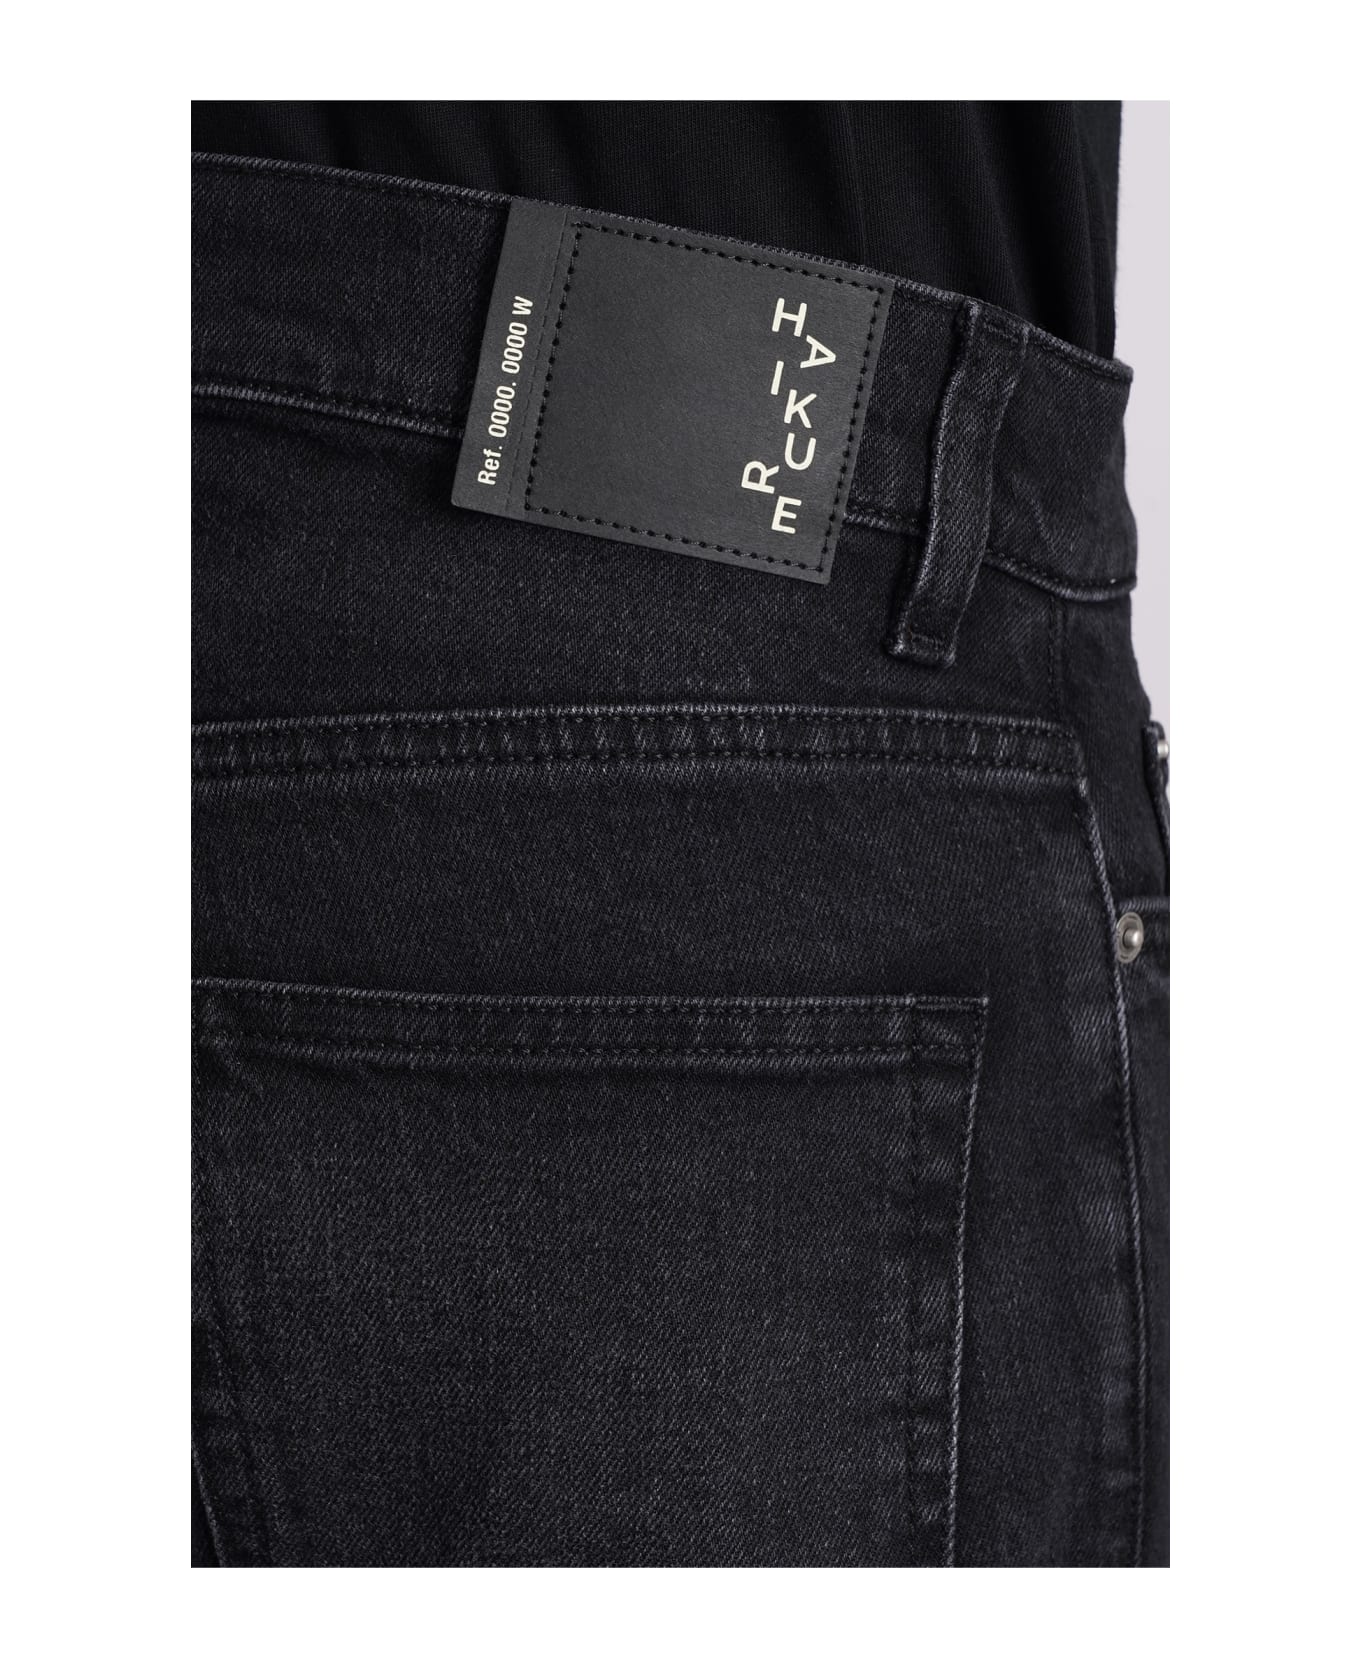 Haikure Tokyo Jeans In Black Cotton - black